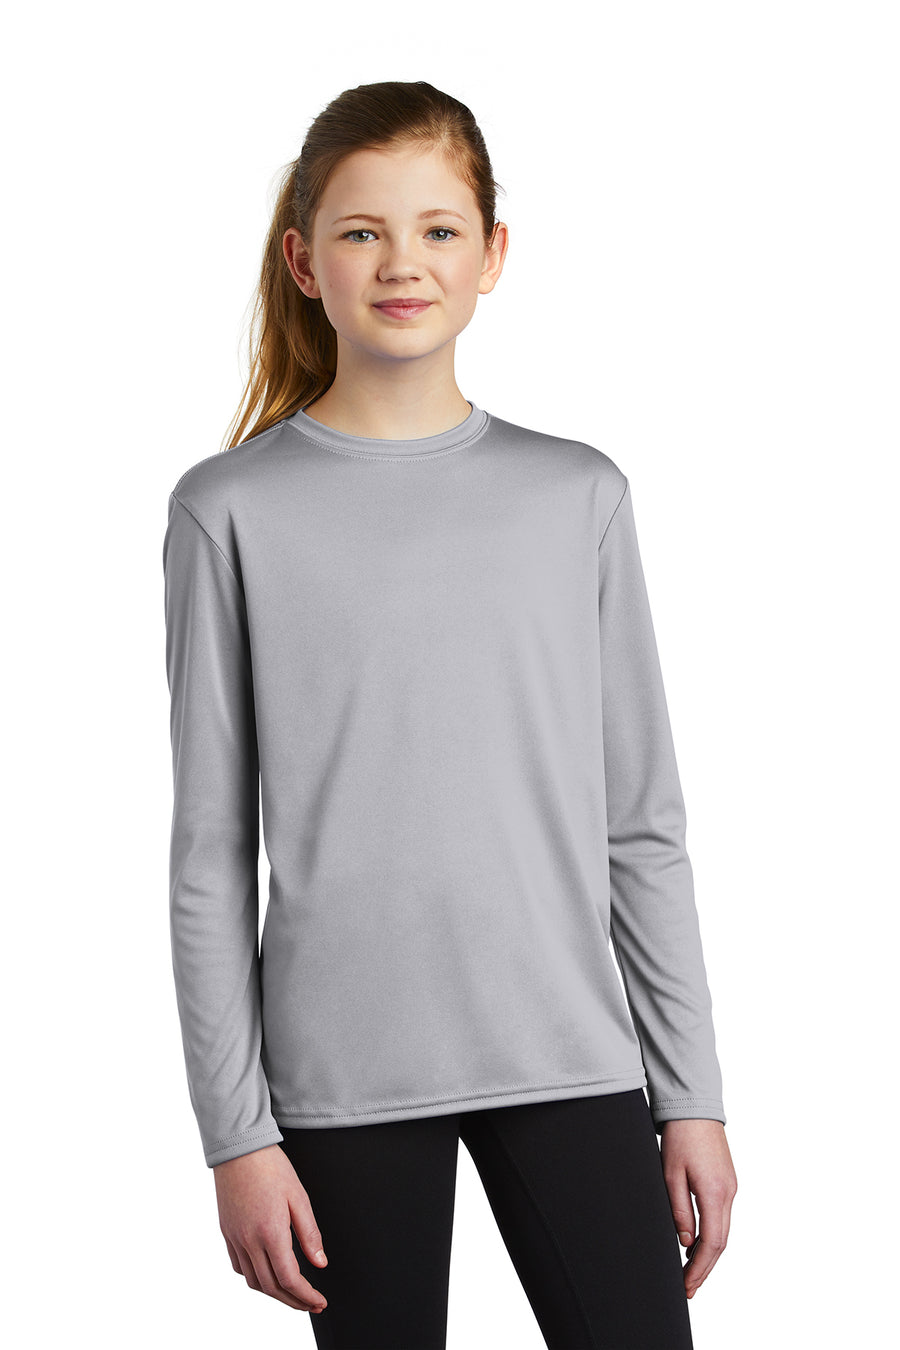 Youth Microfiber Shirt (Long Sleeve)